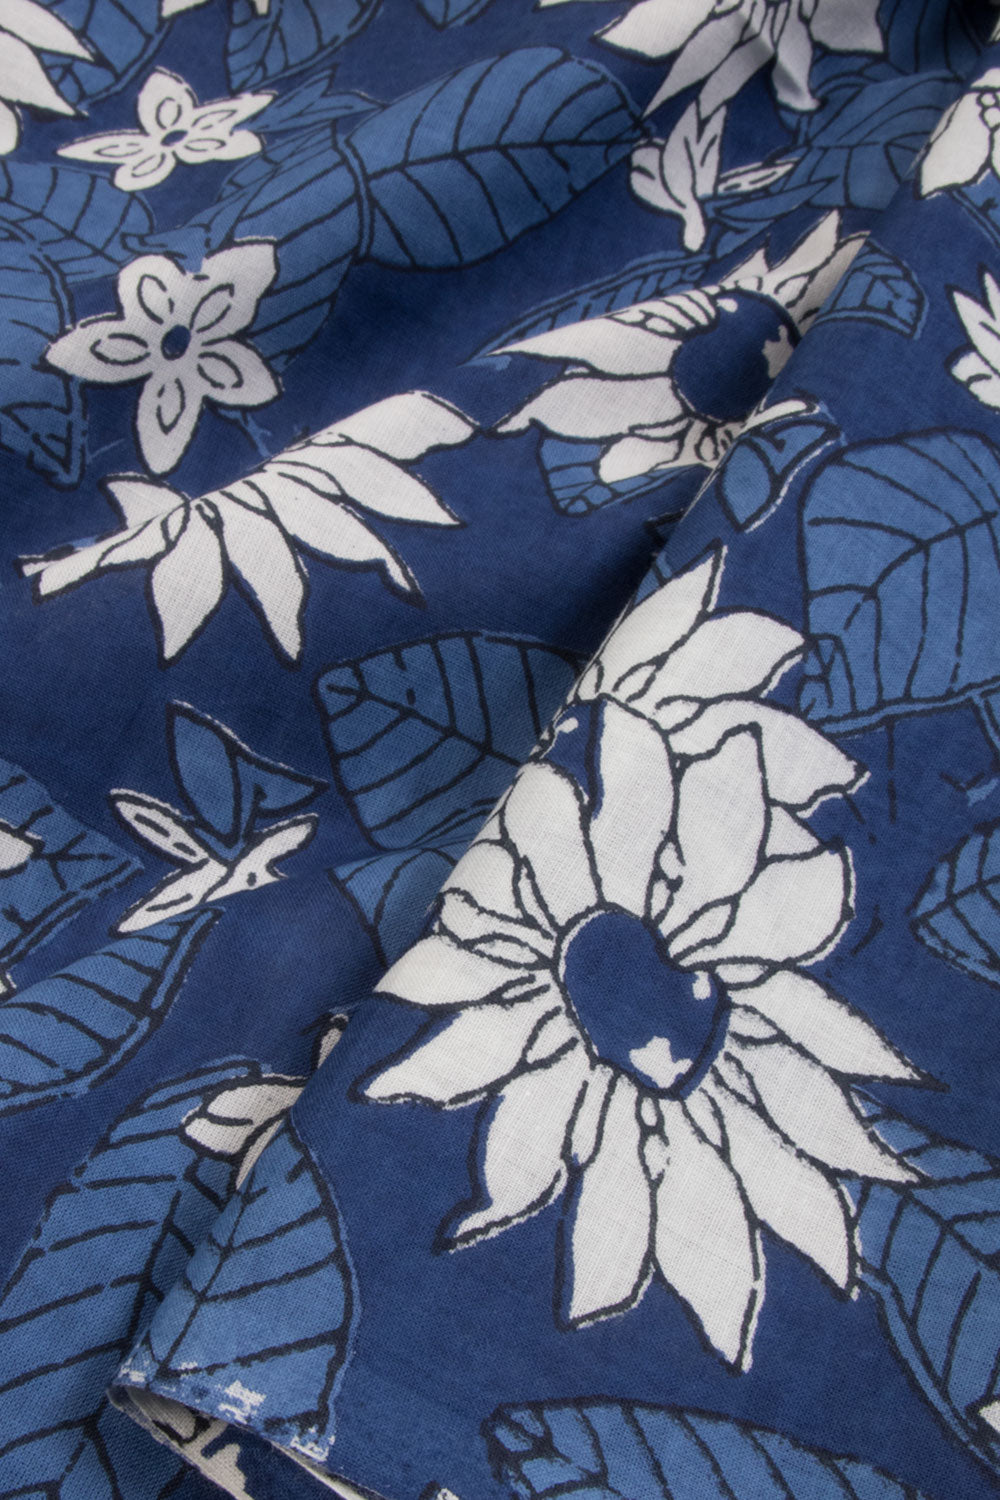 Blue 2-Piece Hand Block Printed Cotton Salwar Suit Material - Avishya